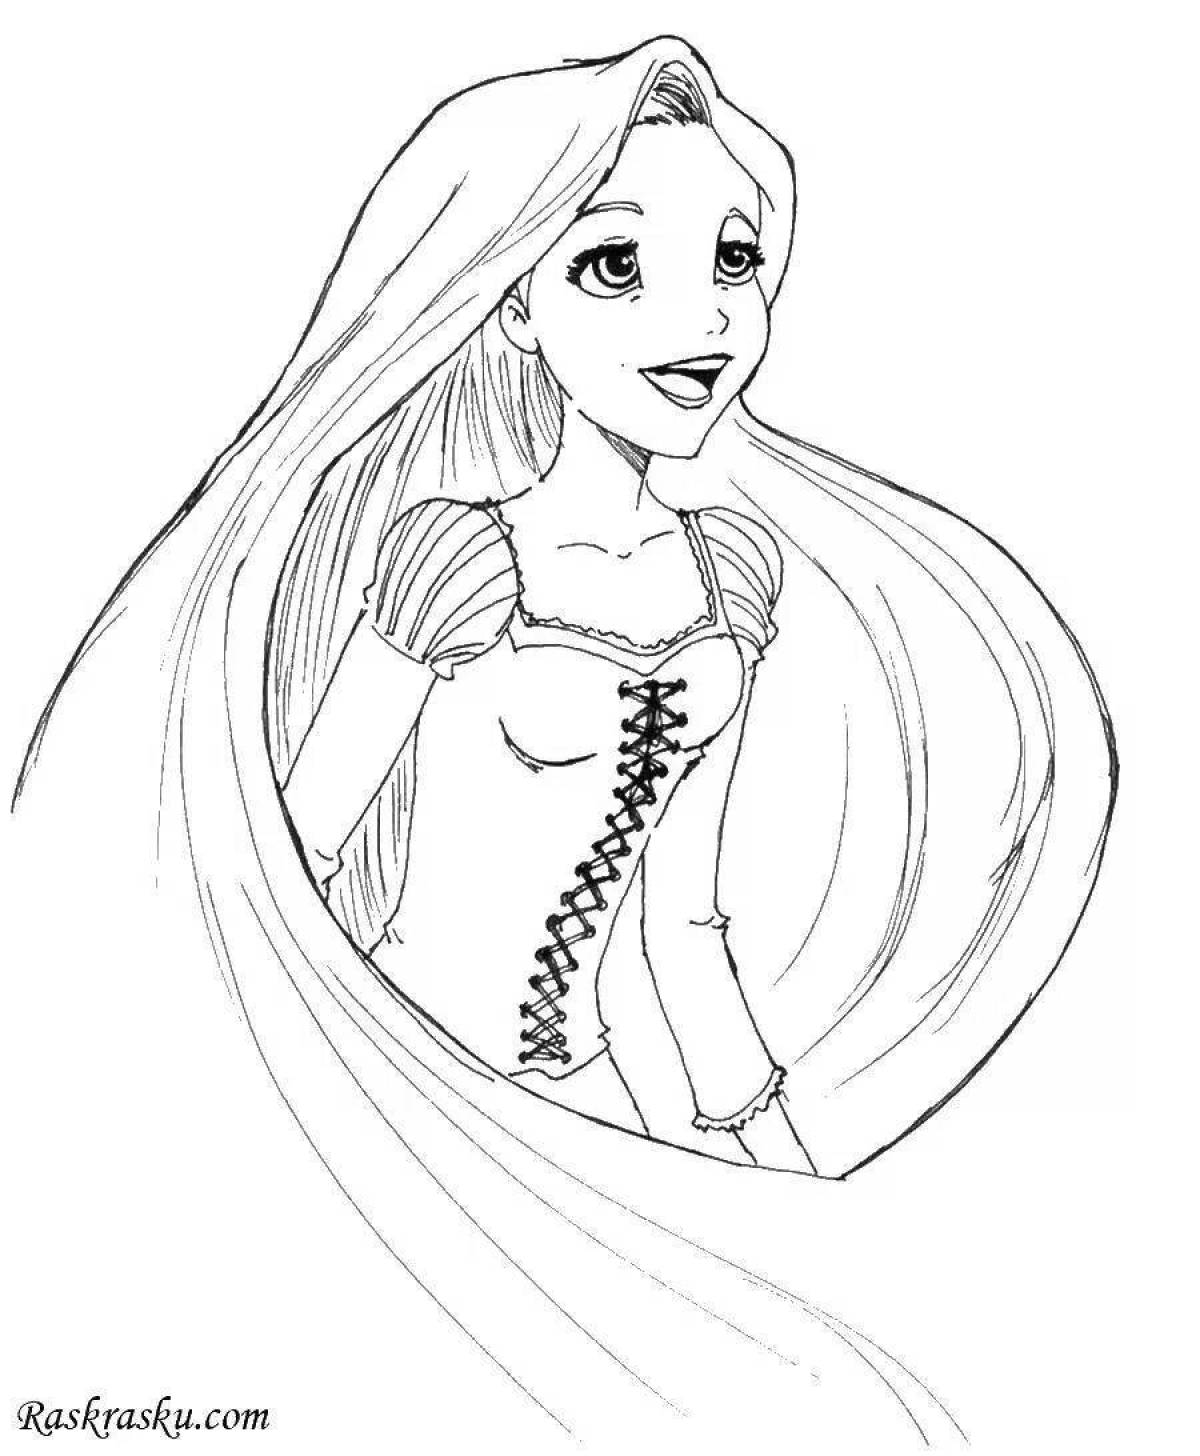 Awesome long hair princess coloring page